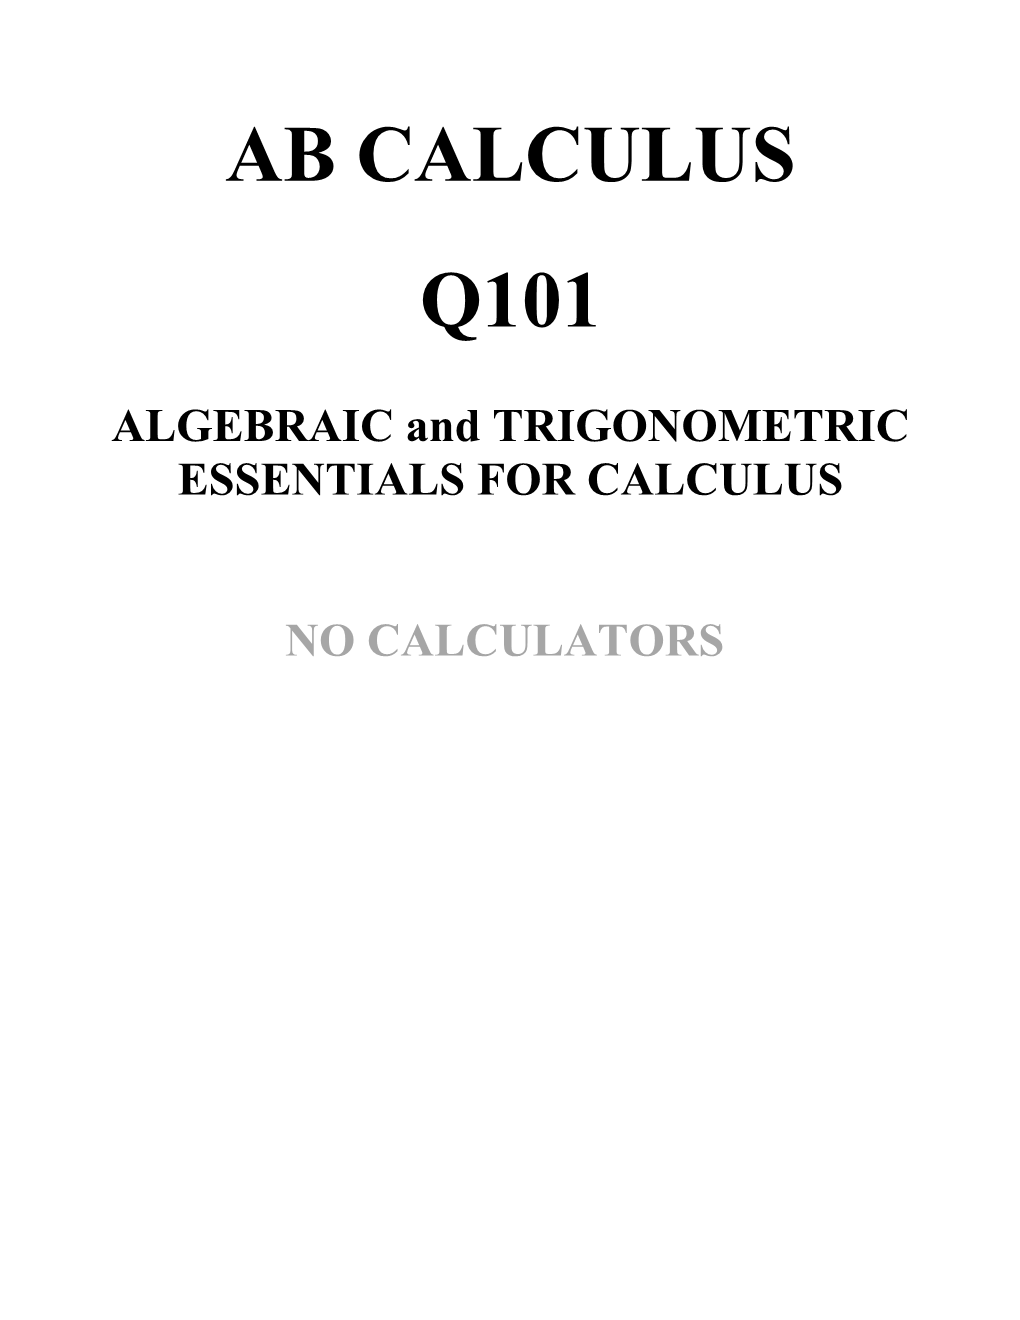 ALGEBRAIC and TRIGONOMETRIC ESSENTIALS for CALCULUS